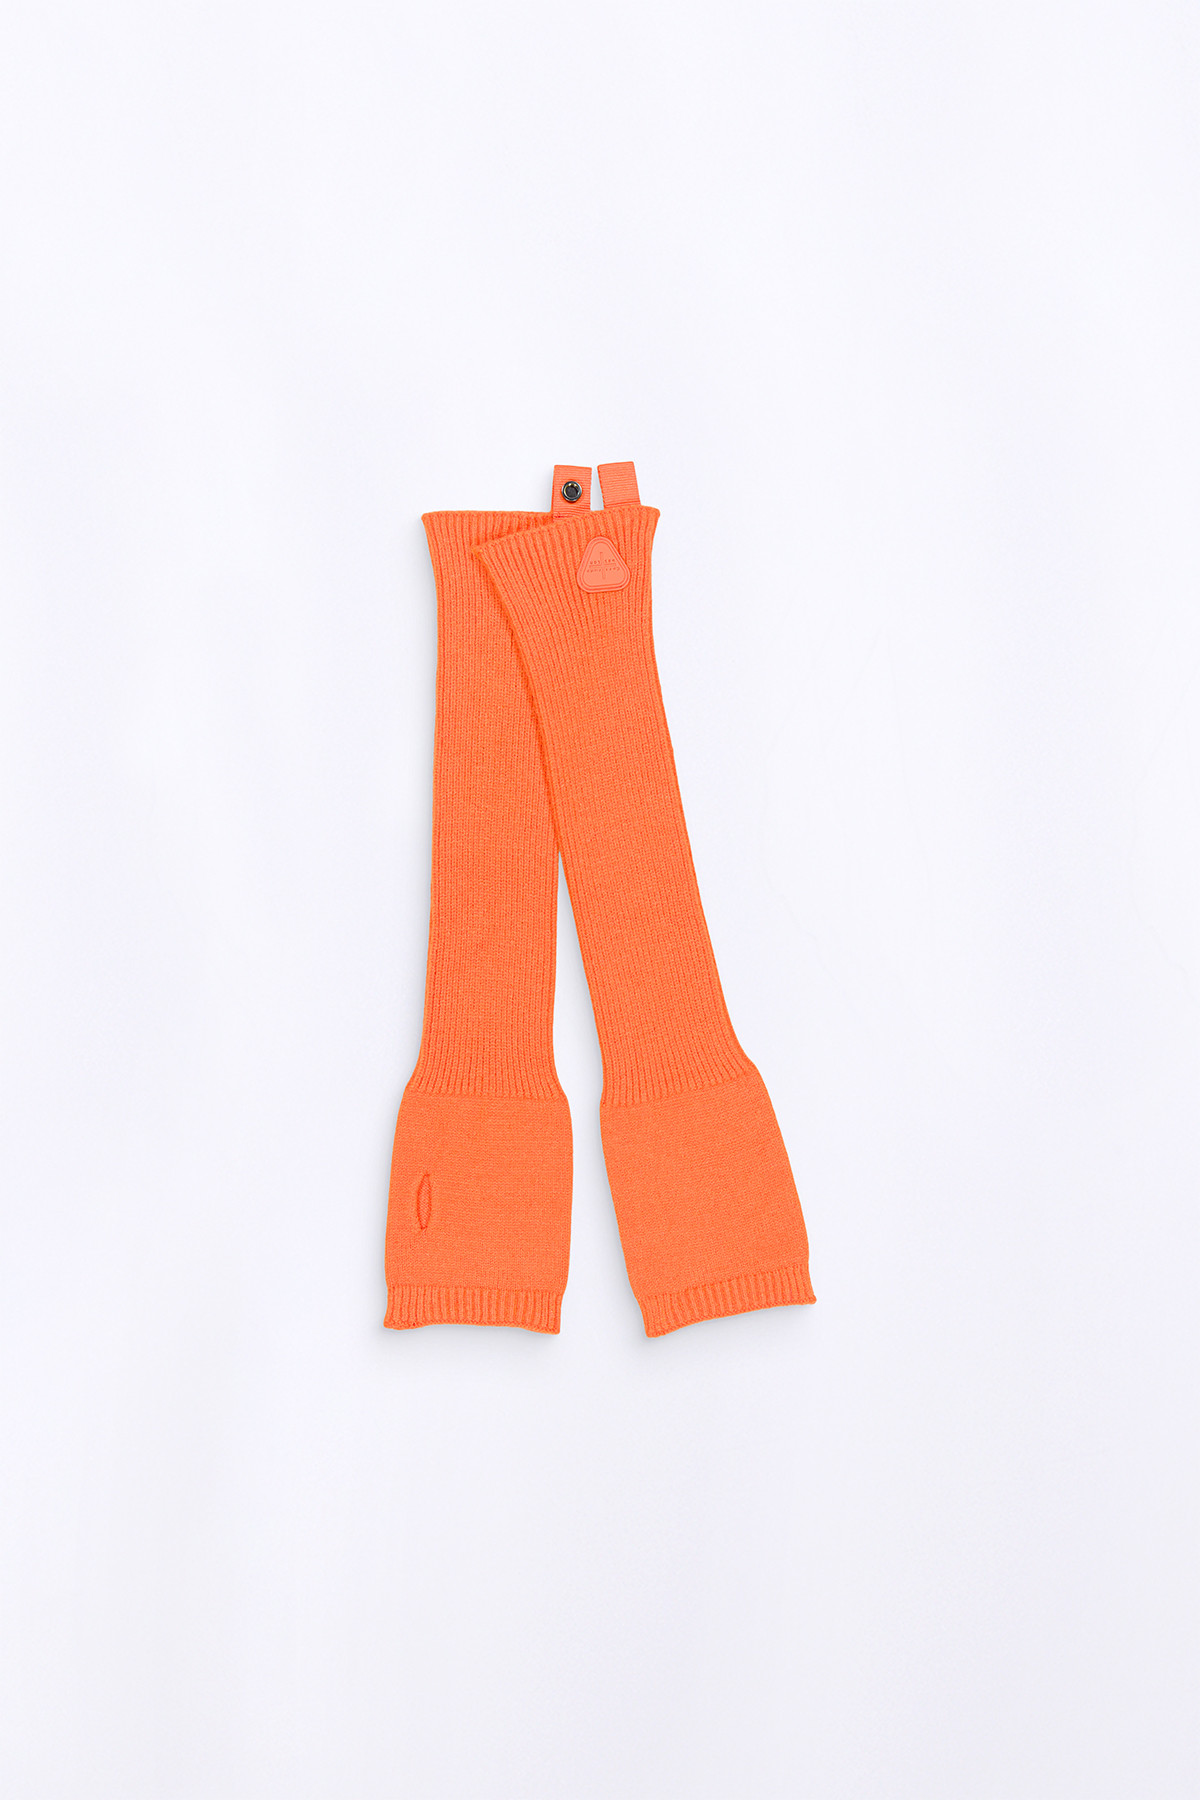 Orange Kitty Long Knit Mittens